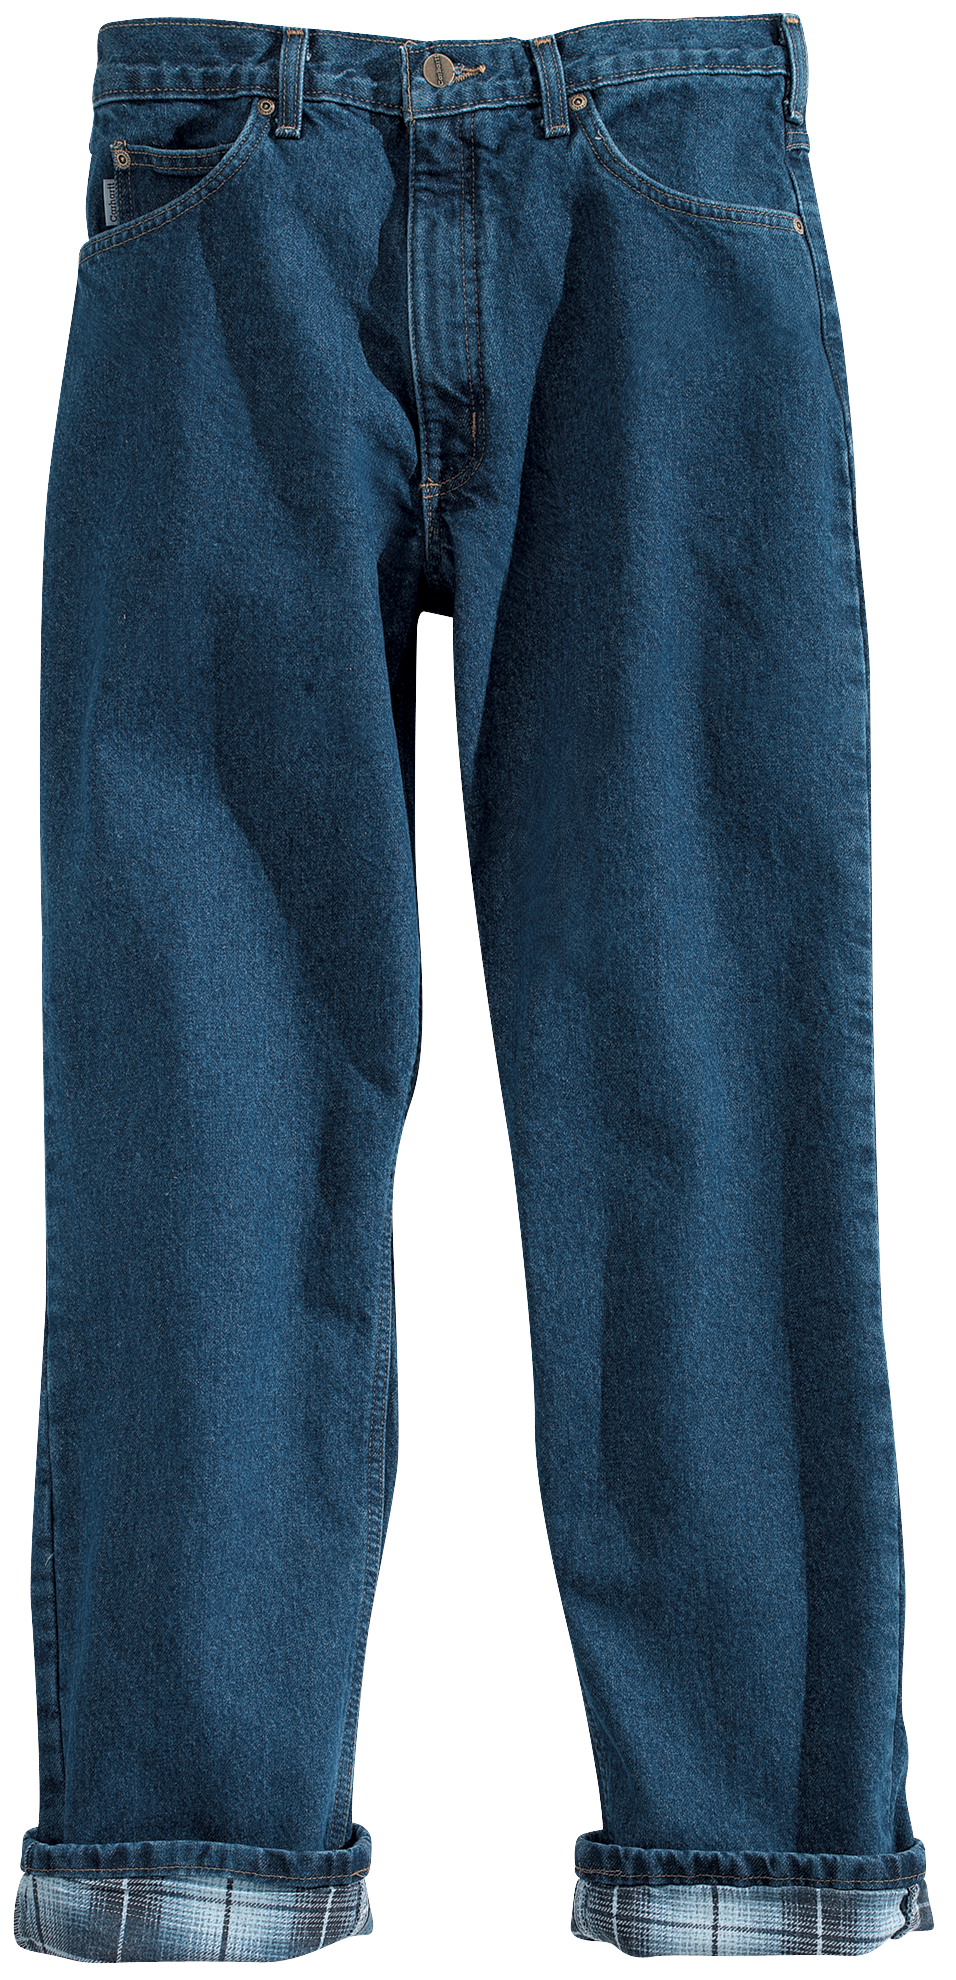 Carhartt Flannel-Lined 5-Pocket Jeans for Men